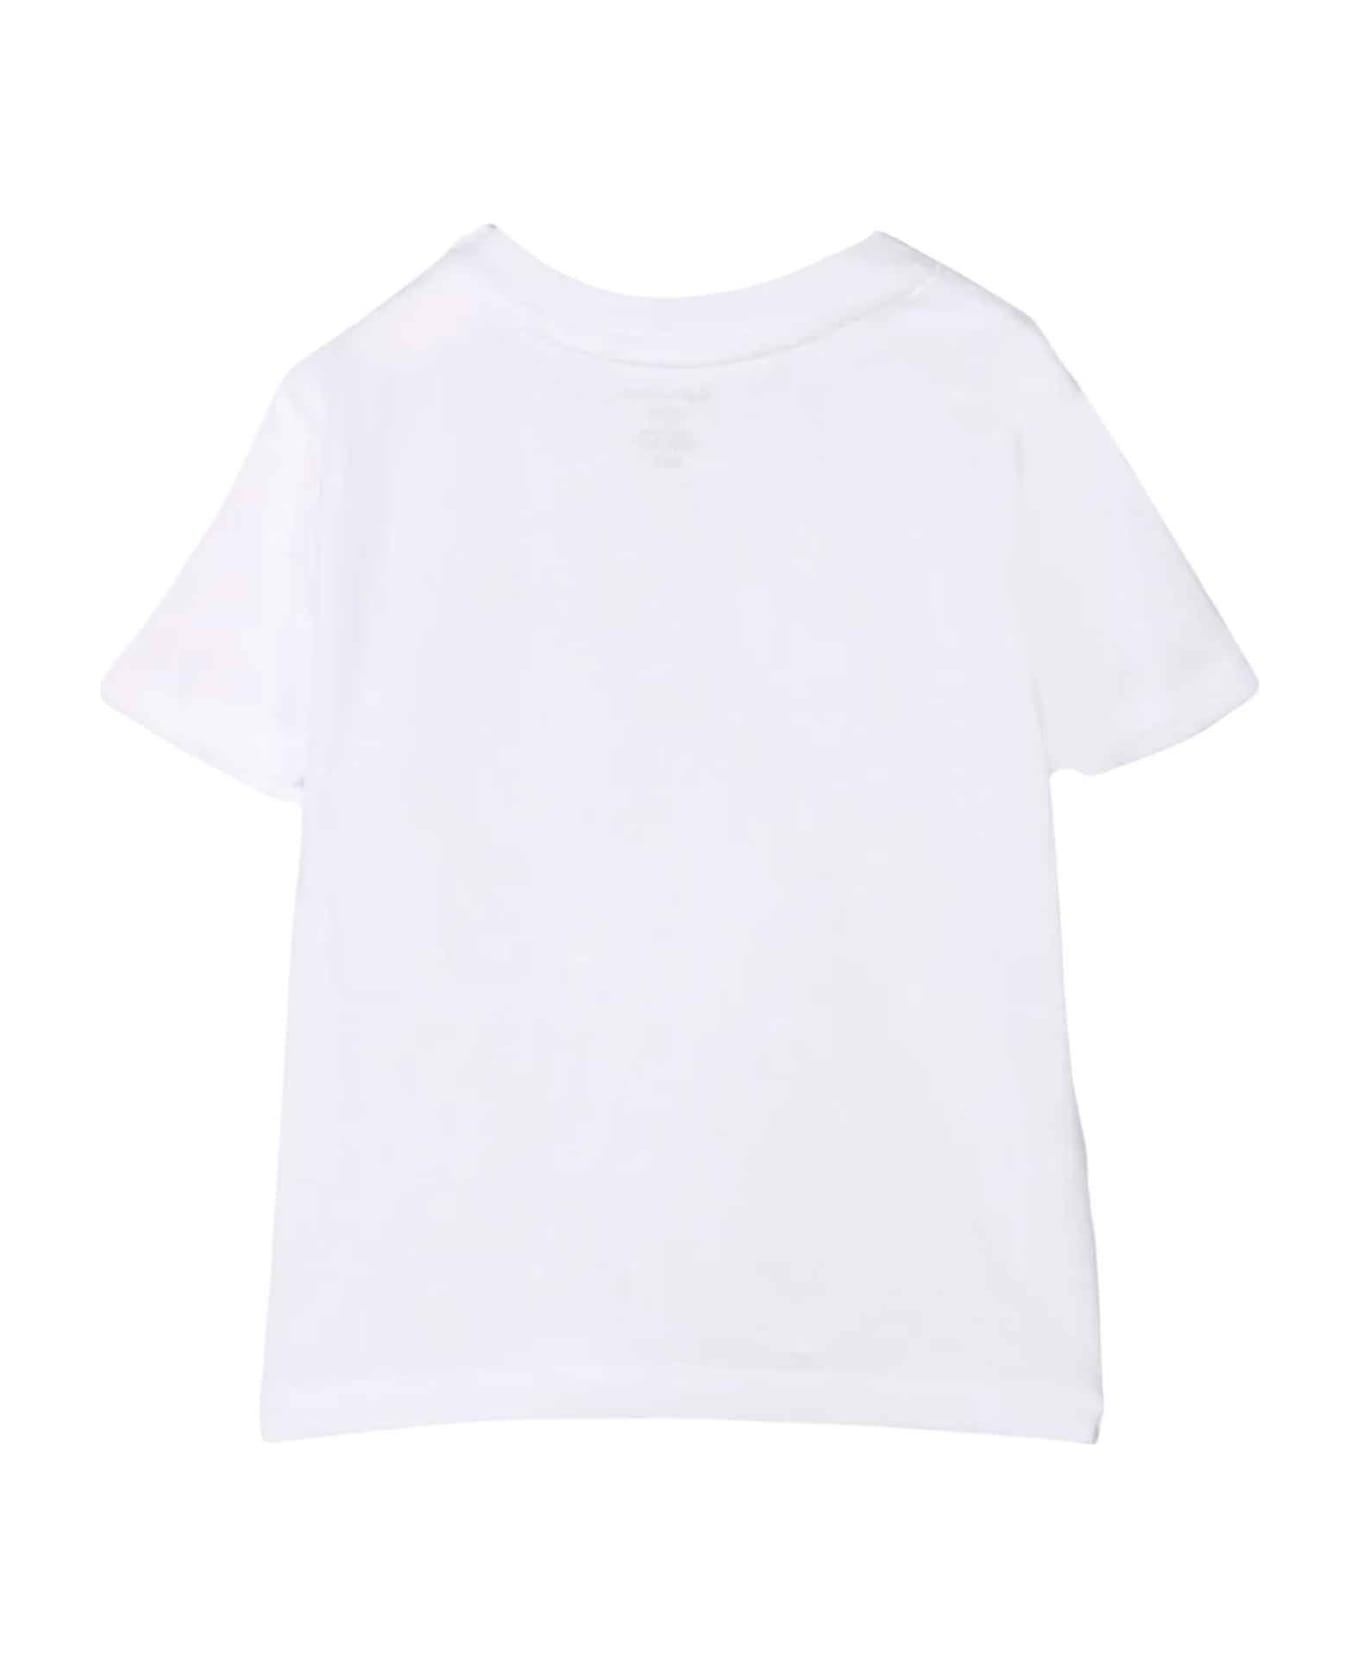 Ralph Lauren White T-shirt Baby Boy - Bianca